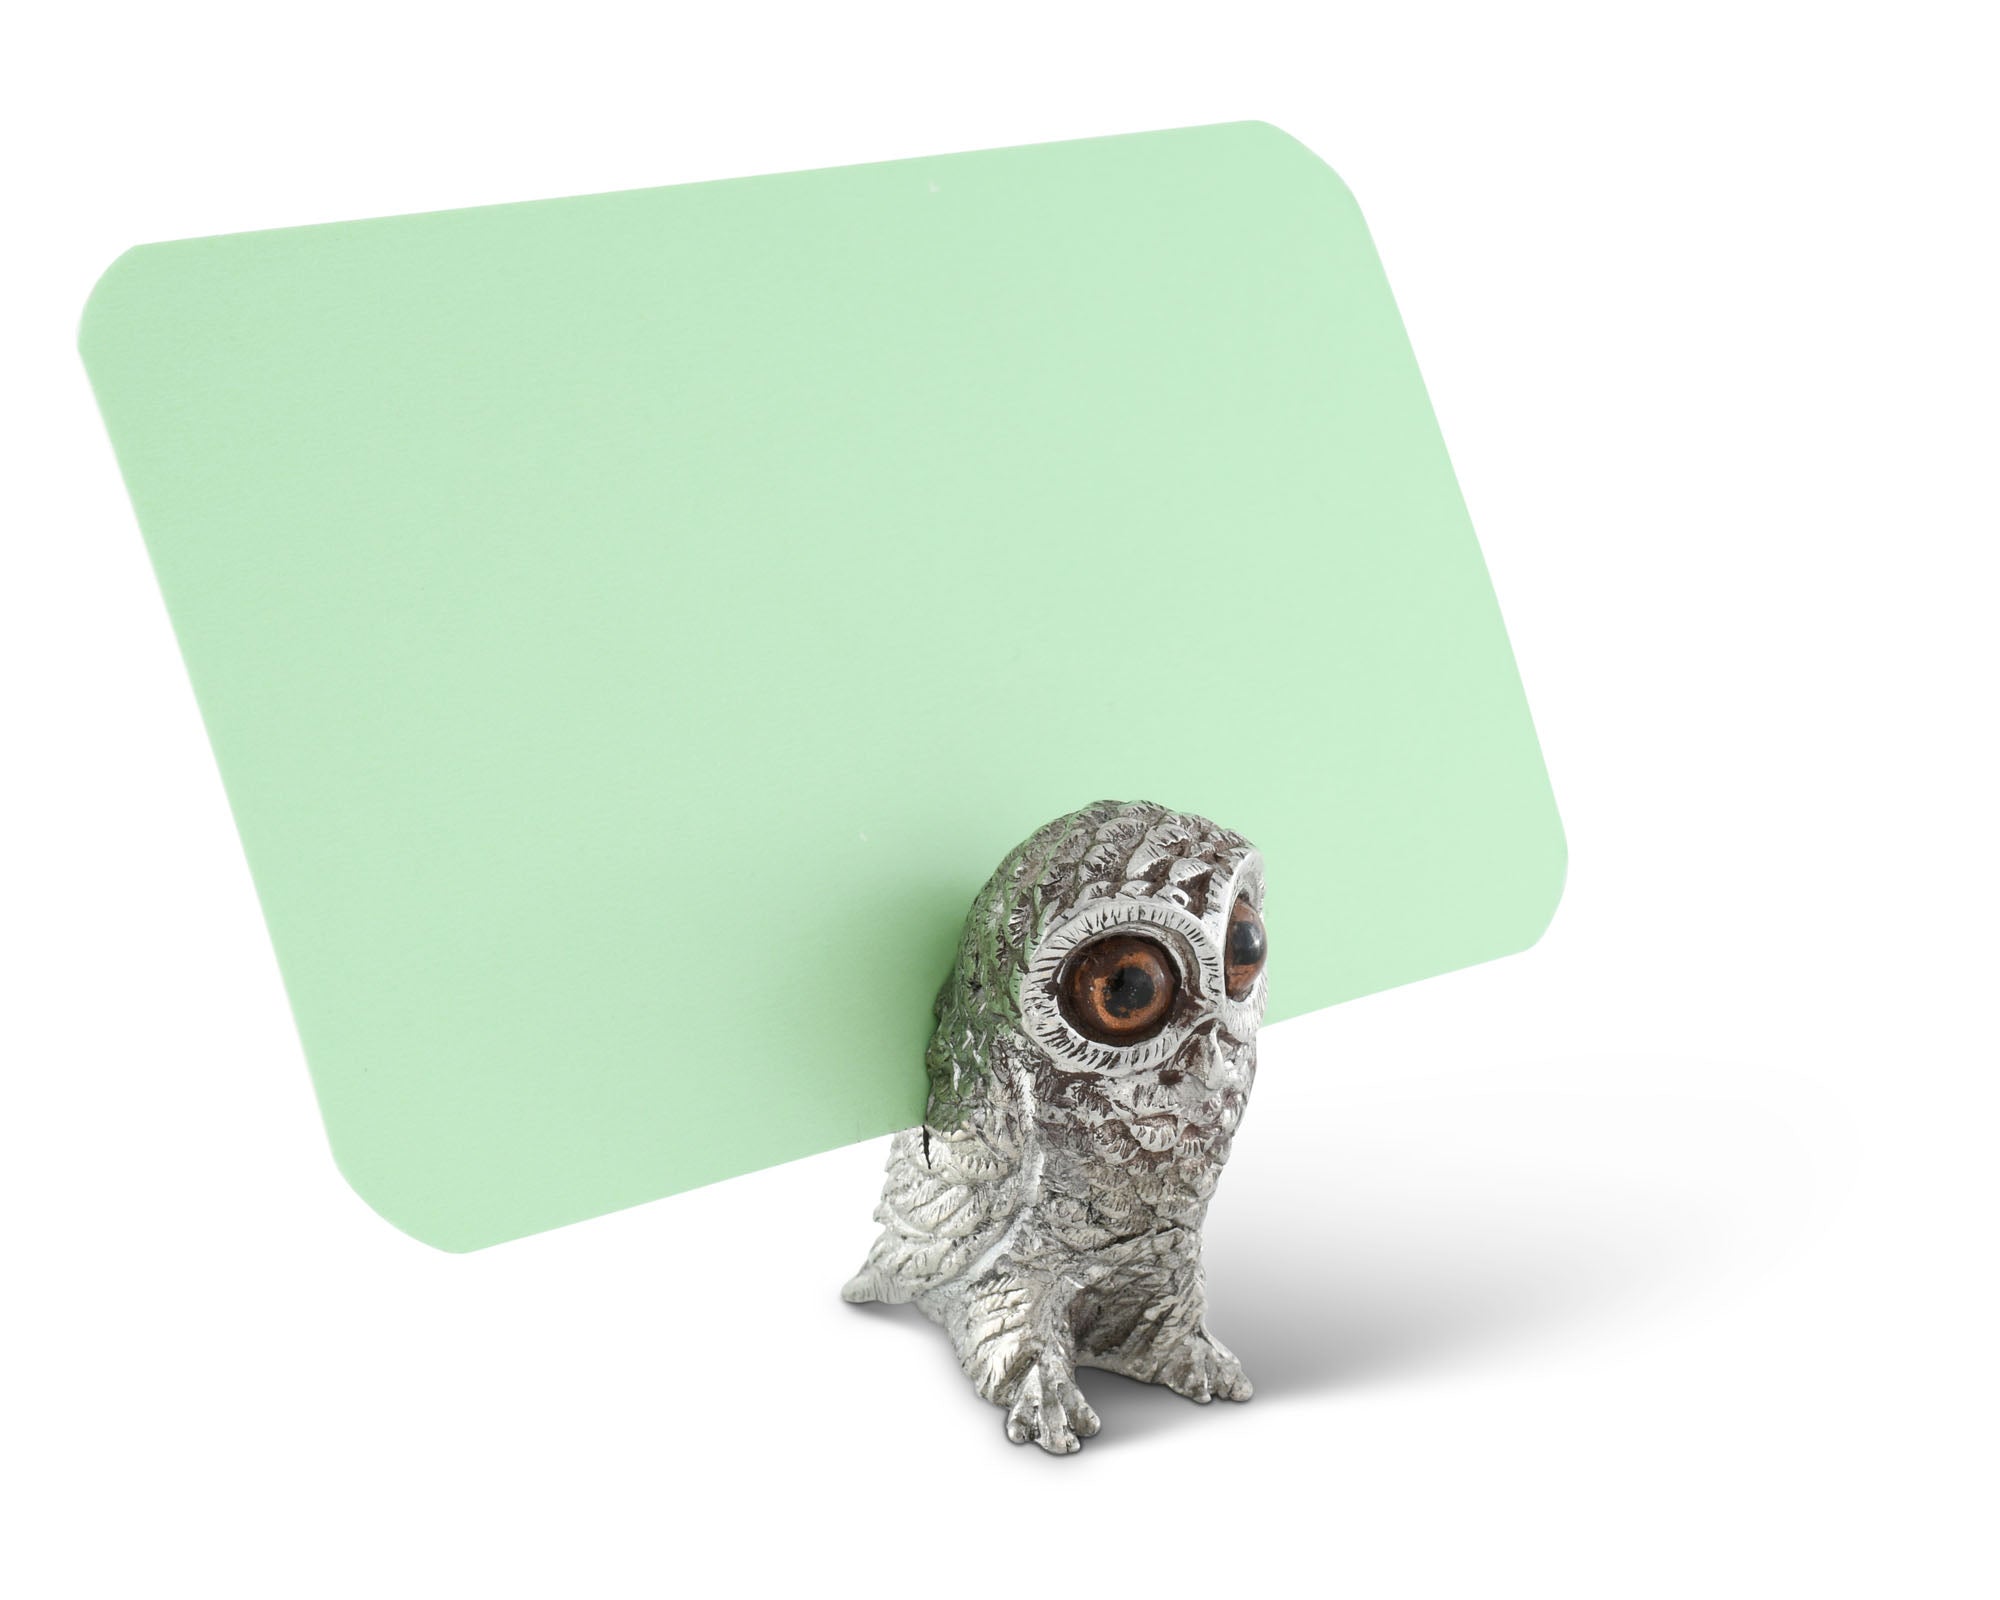 Vagabond House Owl Place Card Holder Product Image